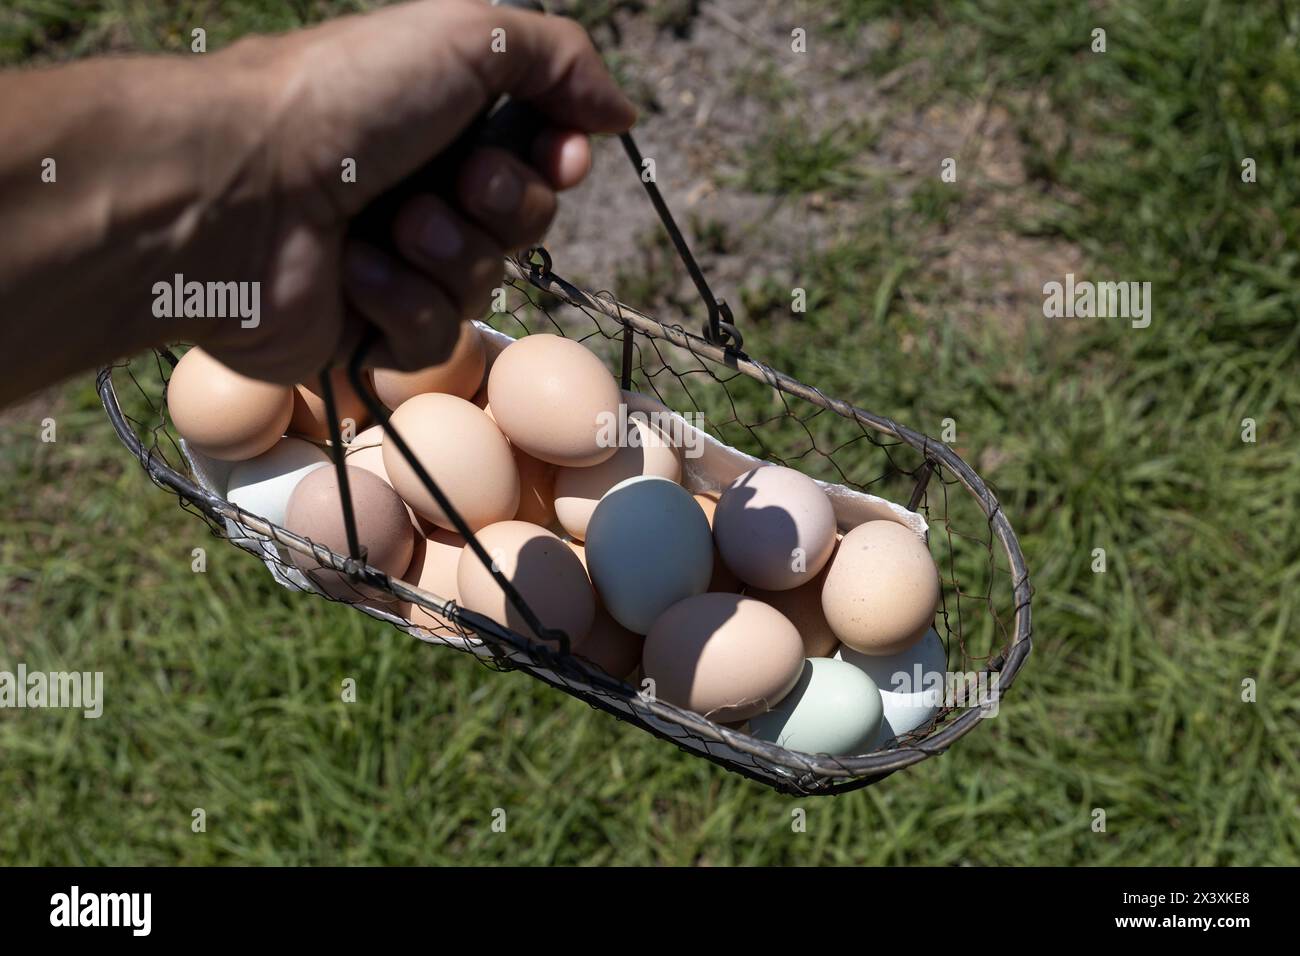 chicken egg basket Stock Photo